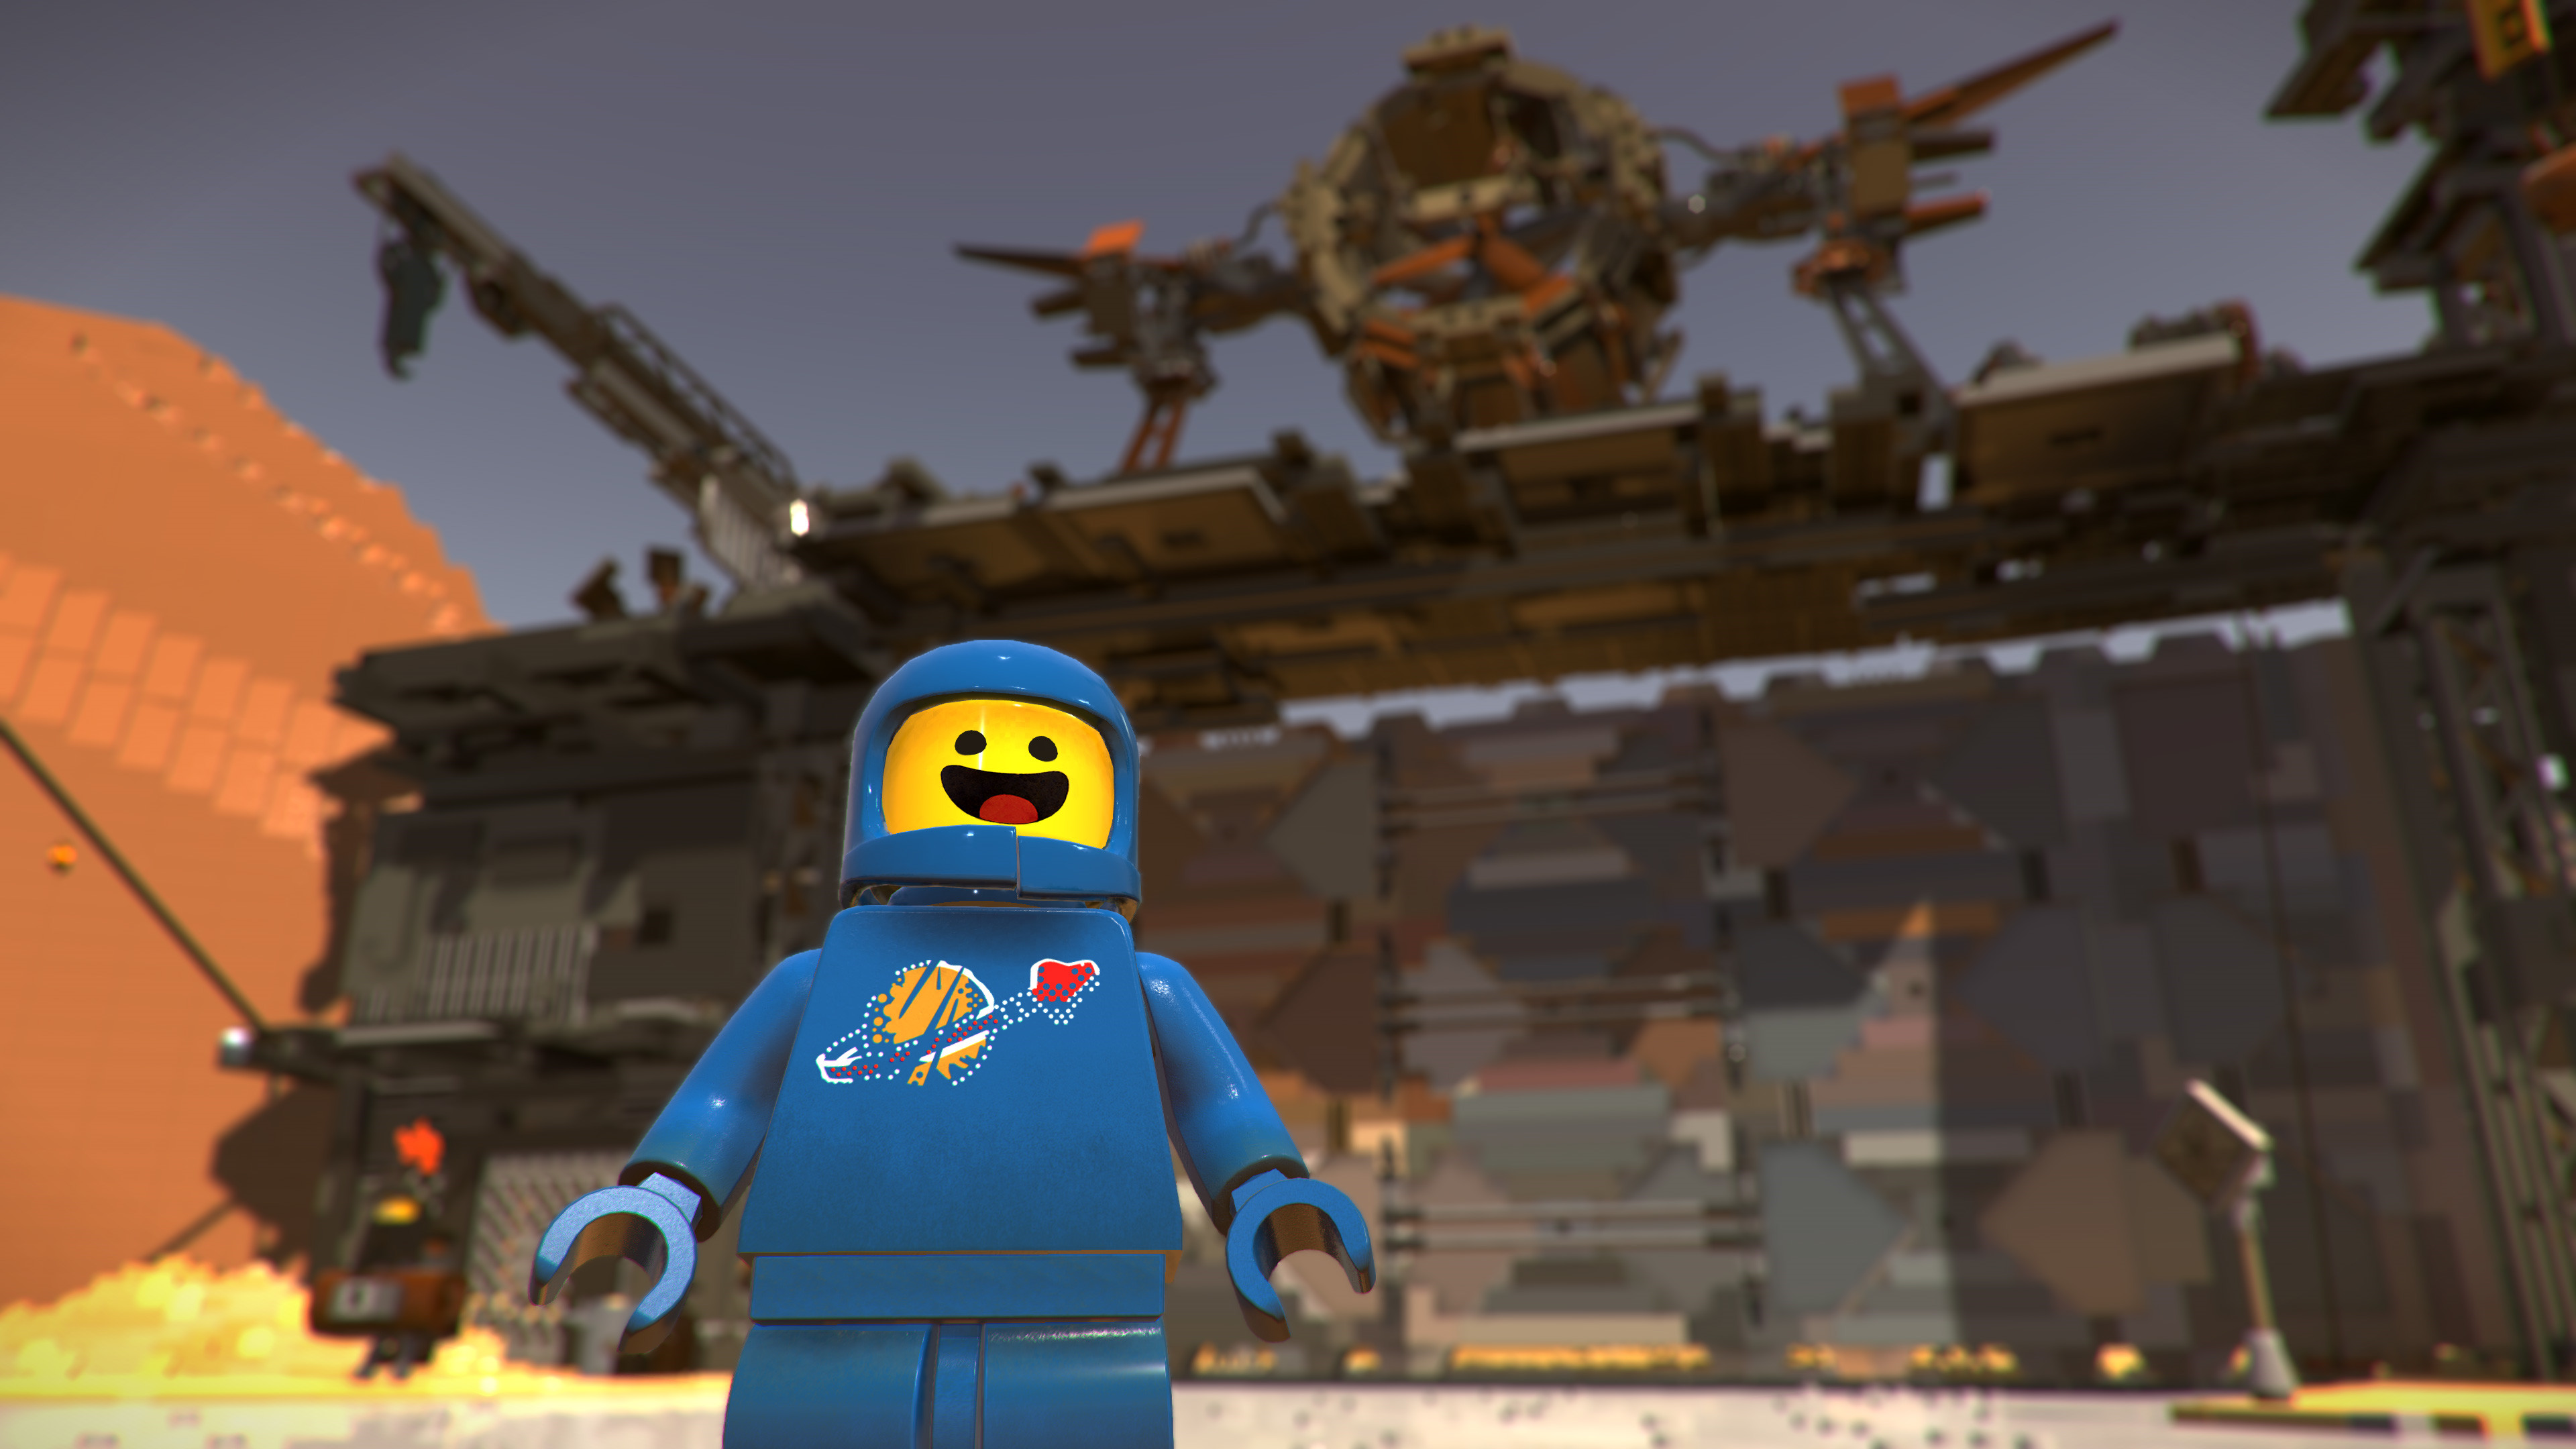 The LEGO Movie 2 Videogame screenshot